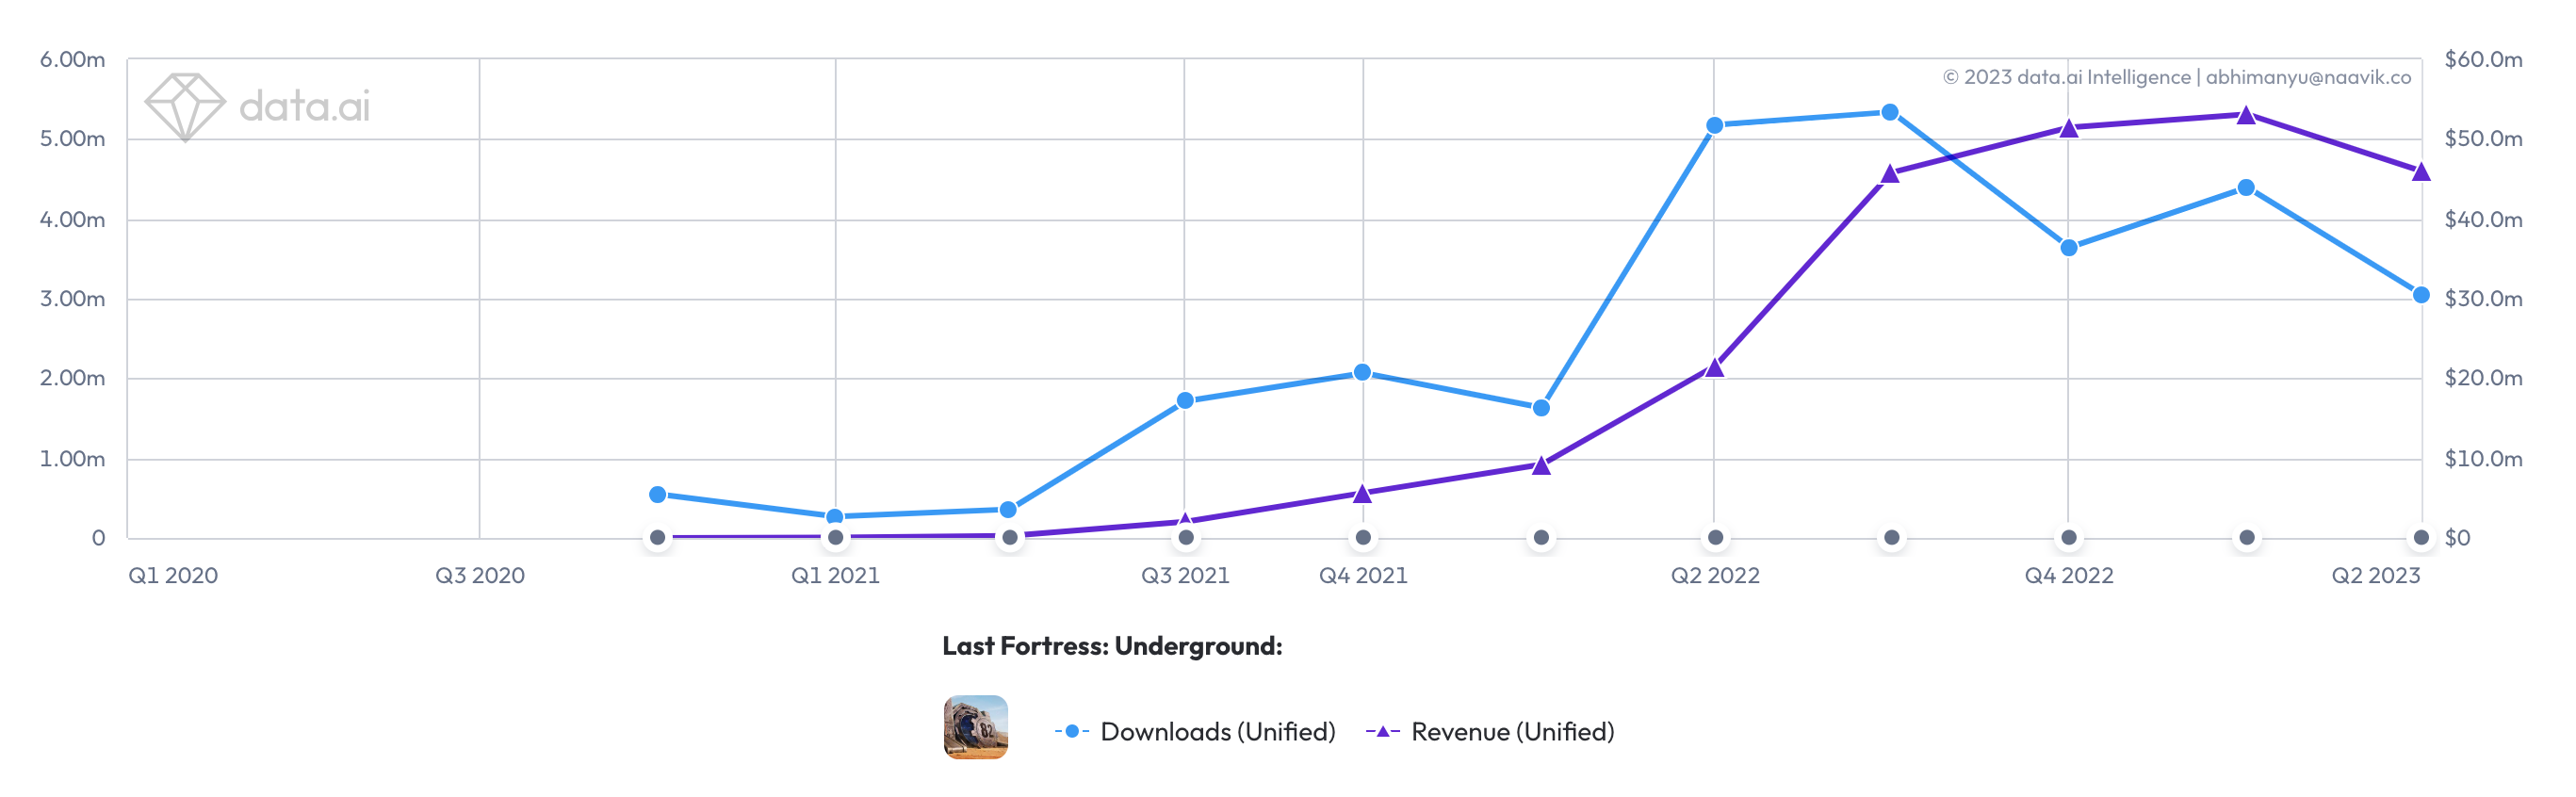 Last Fortress: Underground data.ai graph